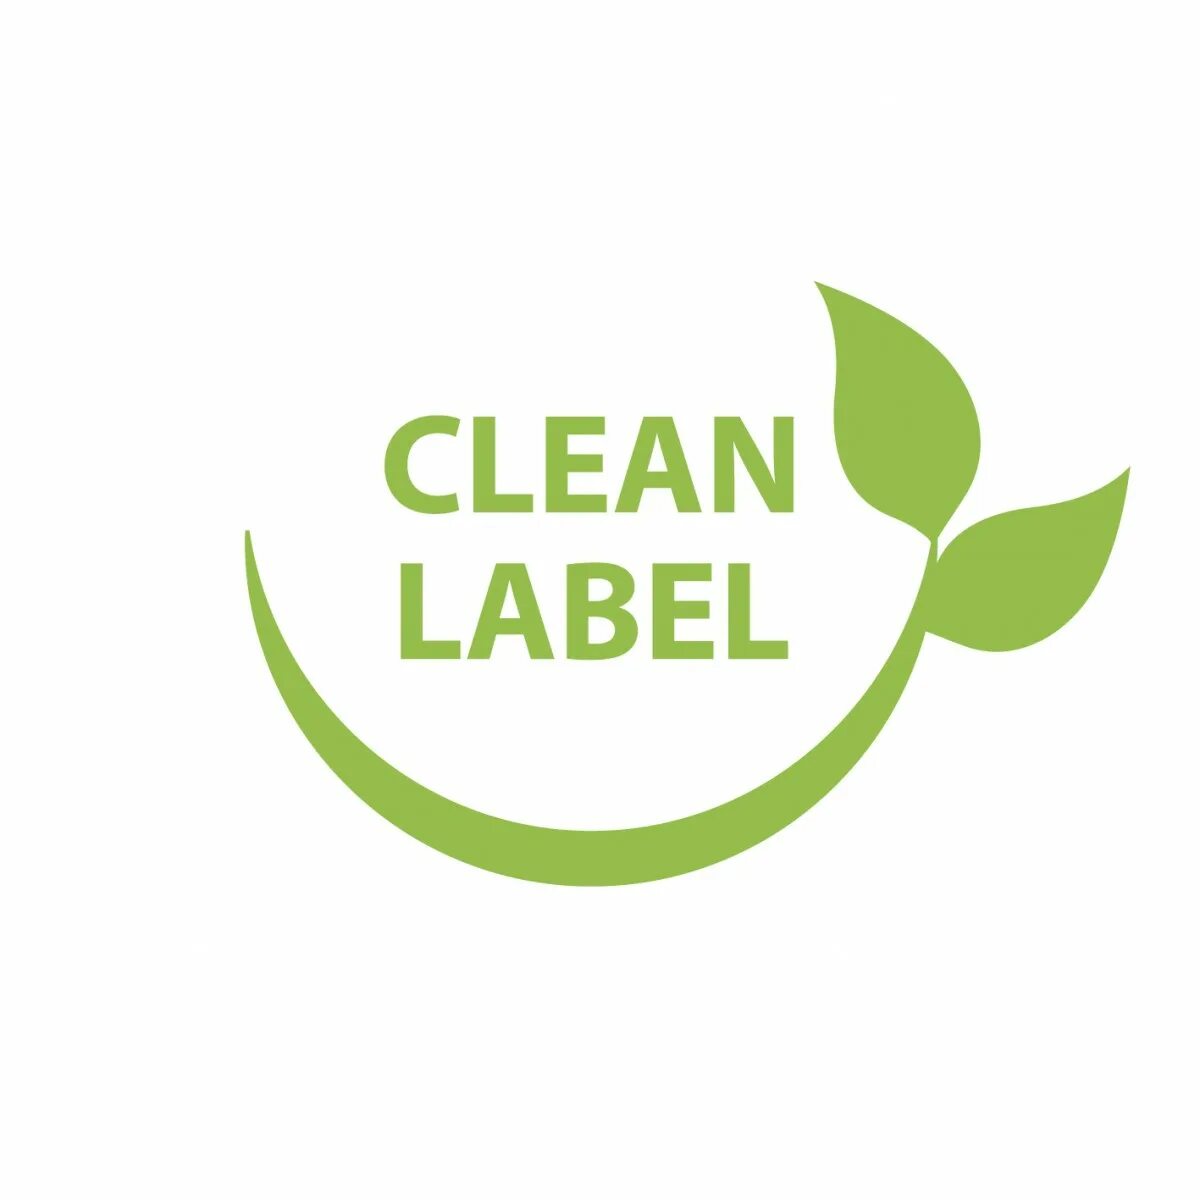 Чистая этикетка. Clean Label. Clean Label логотип. Надписи Clam.